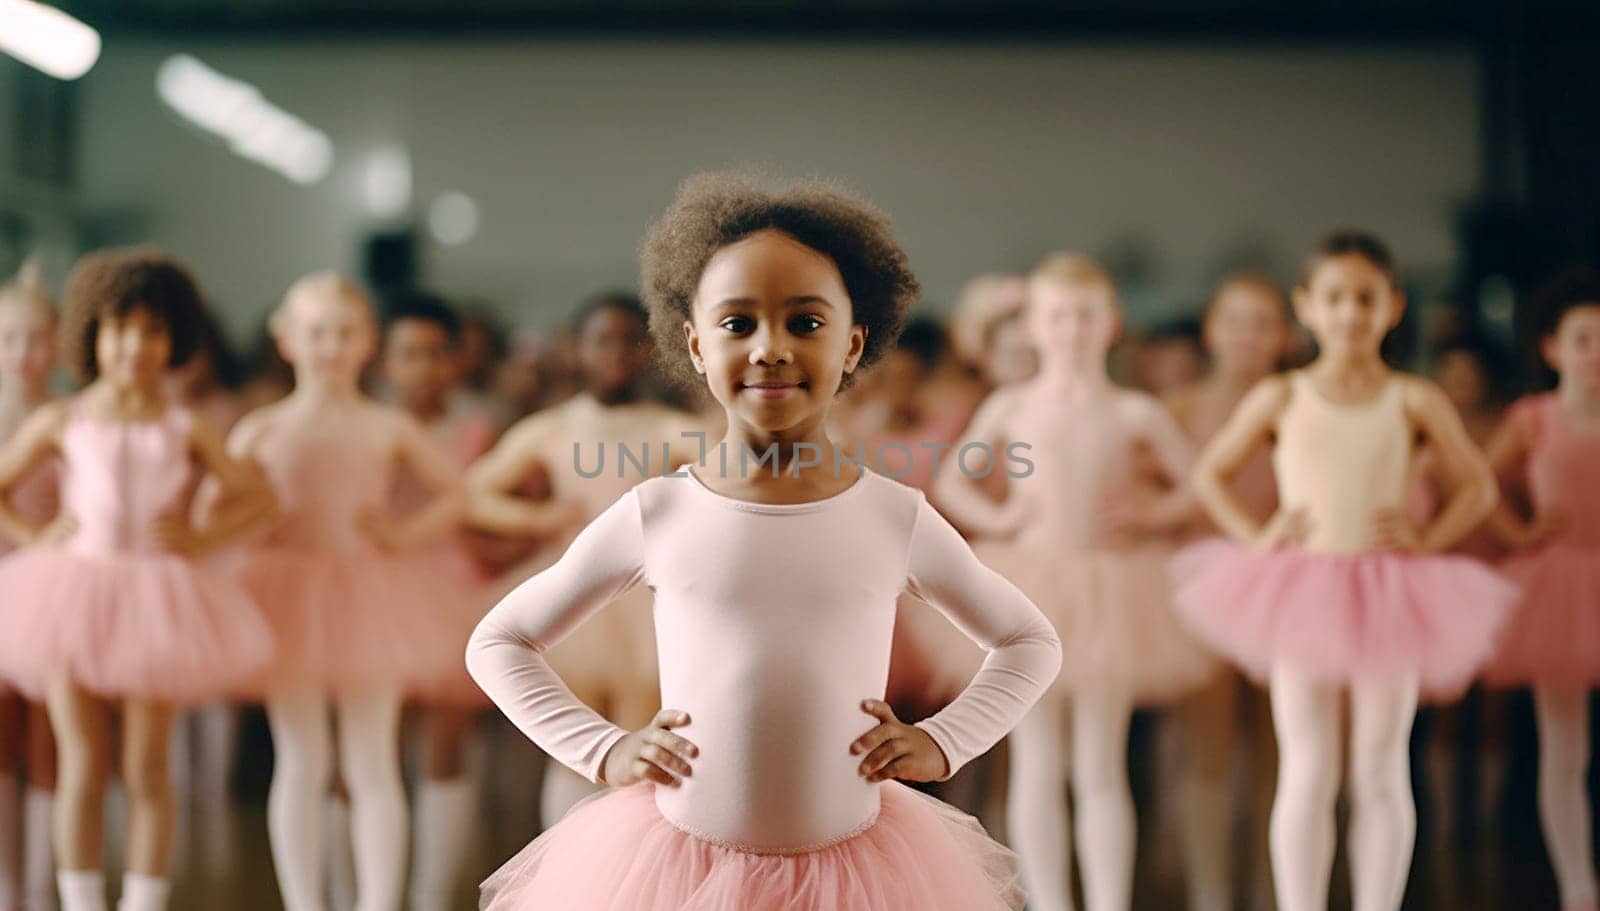 Proud African american little girl on ballet wearing a pink tutu skirt. Children standing in ballet poses in studio. Graceful ballerinas dancing together in studio having fun education children